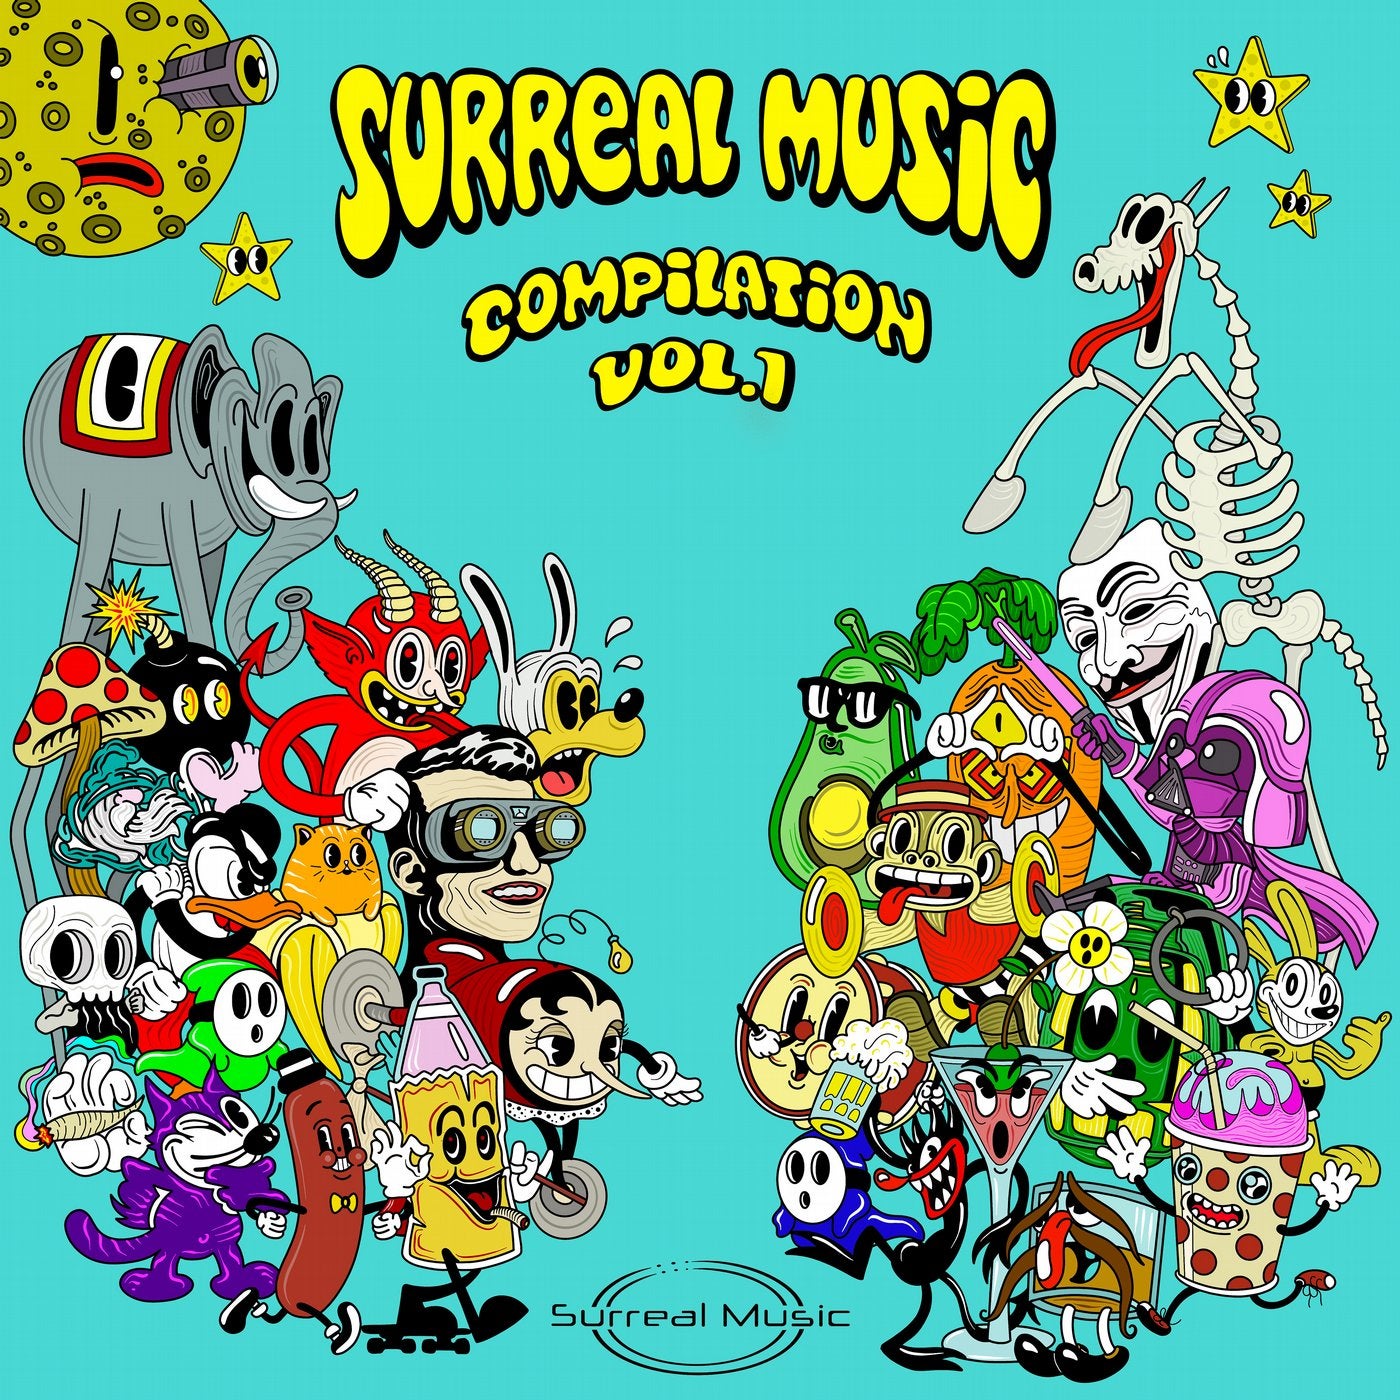 Surreal Music Compilation, Vol. 1